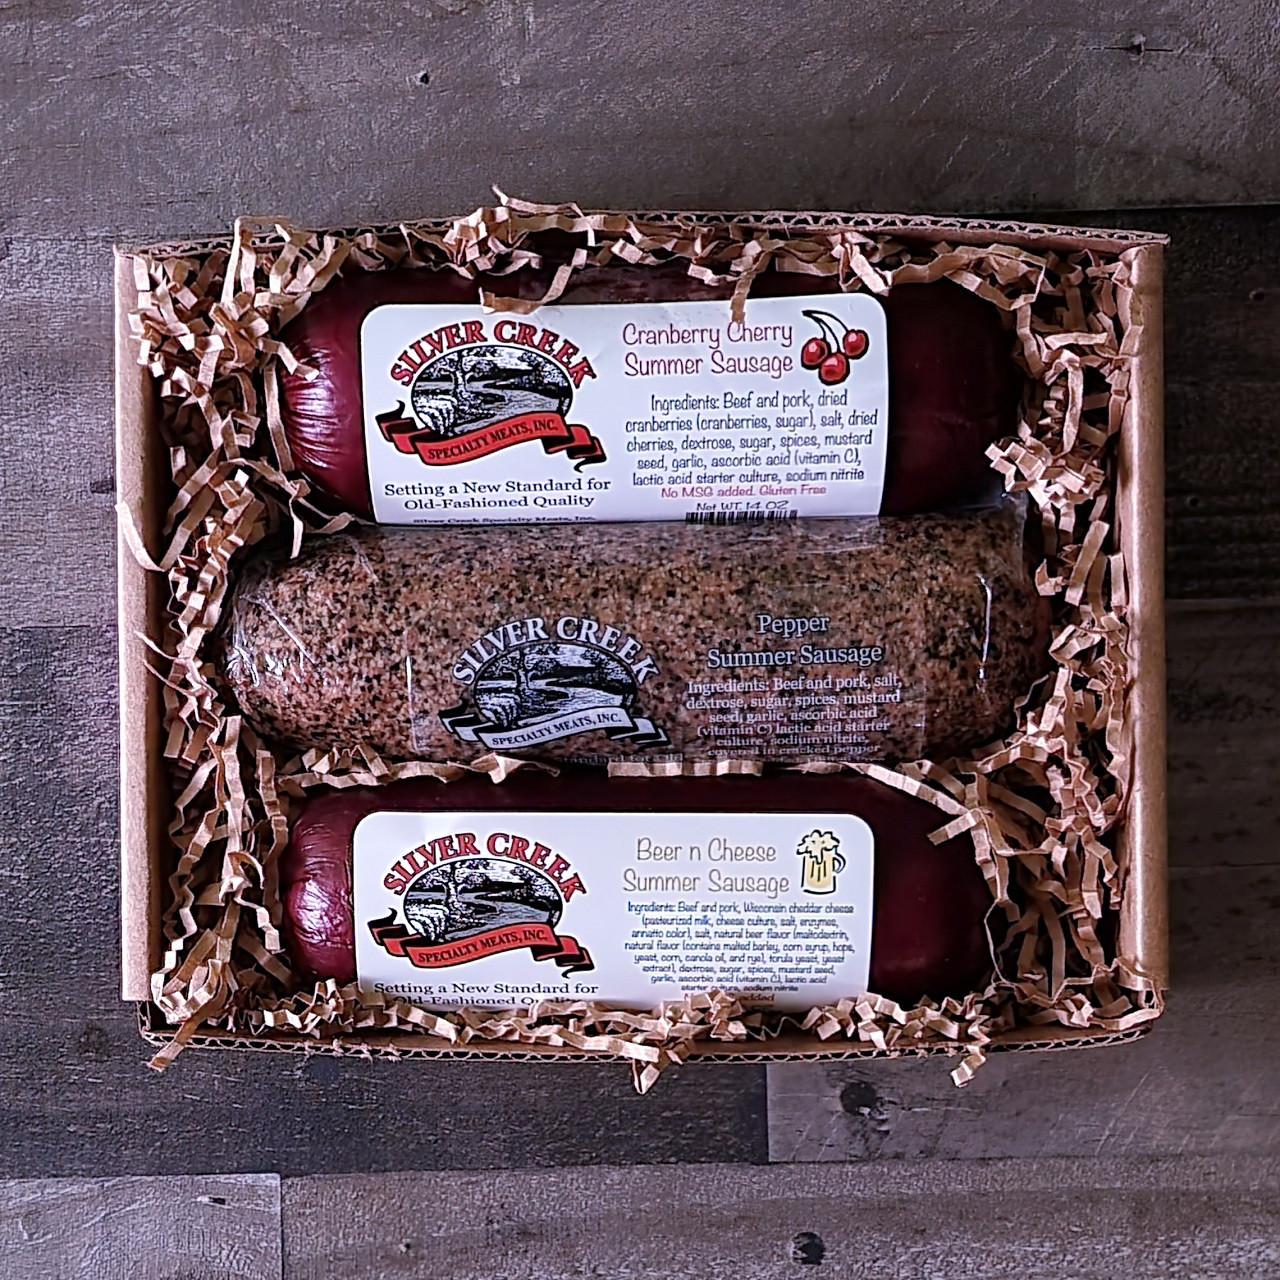 Cheese & Sausage Sampler Gift Box